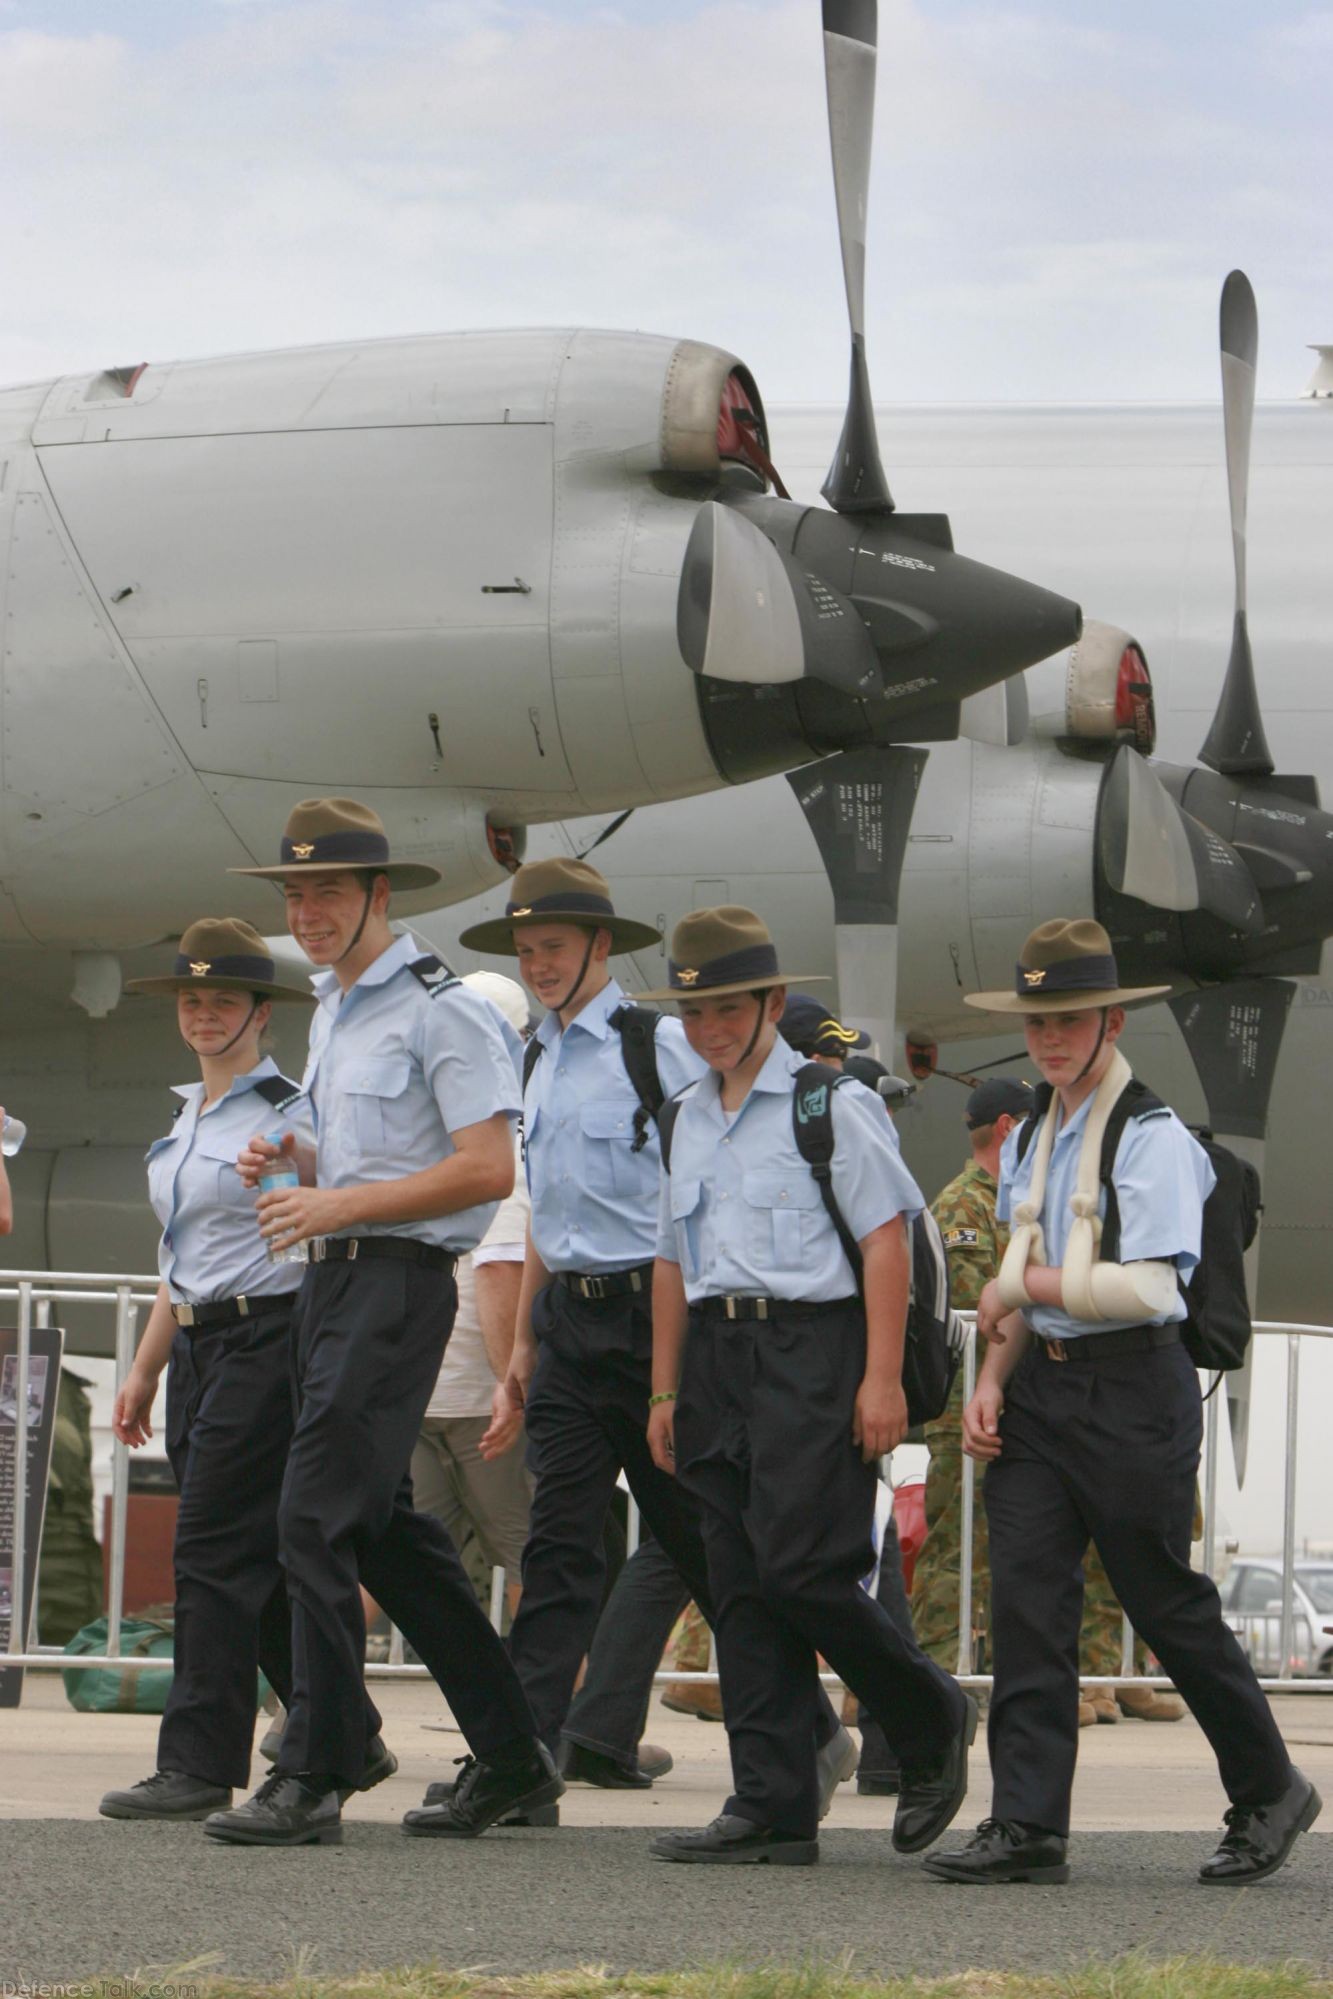 429 Squadron Australian Air Force Cadets